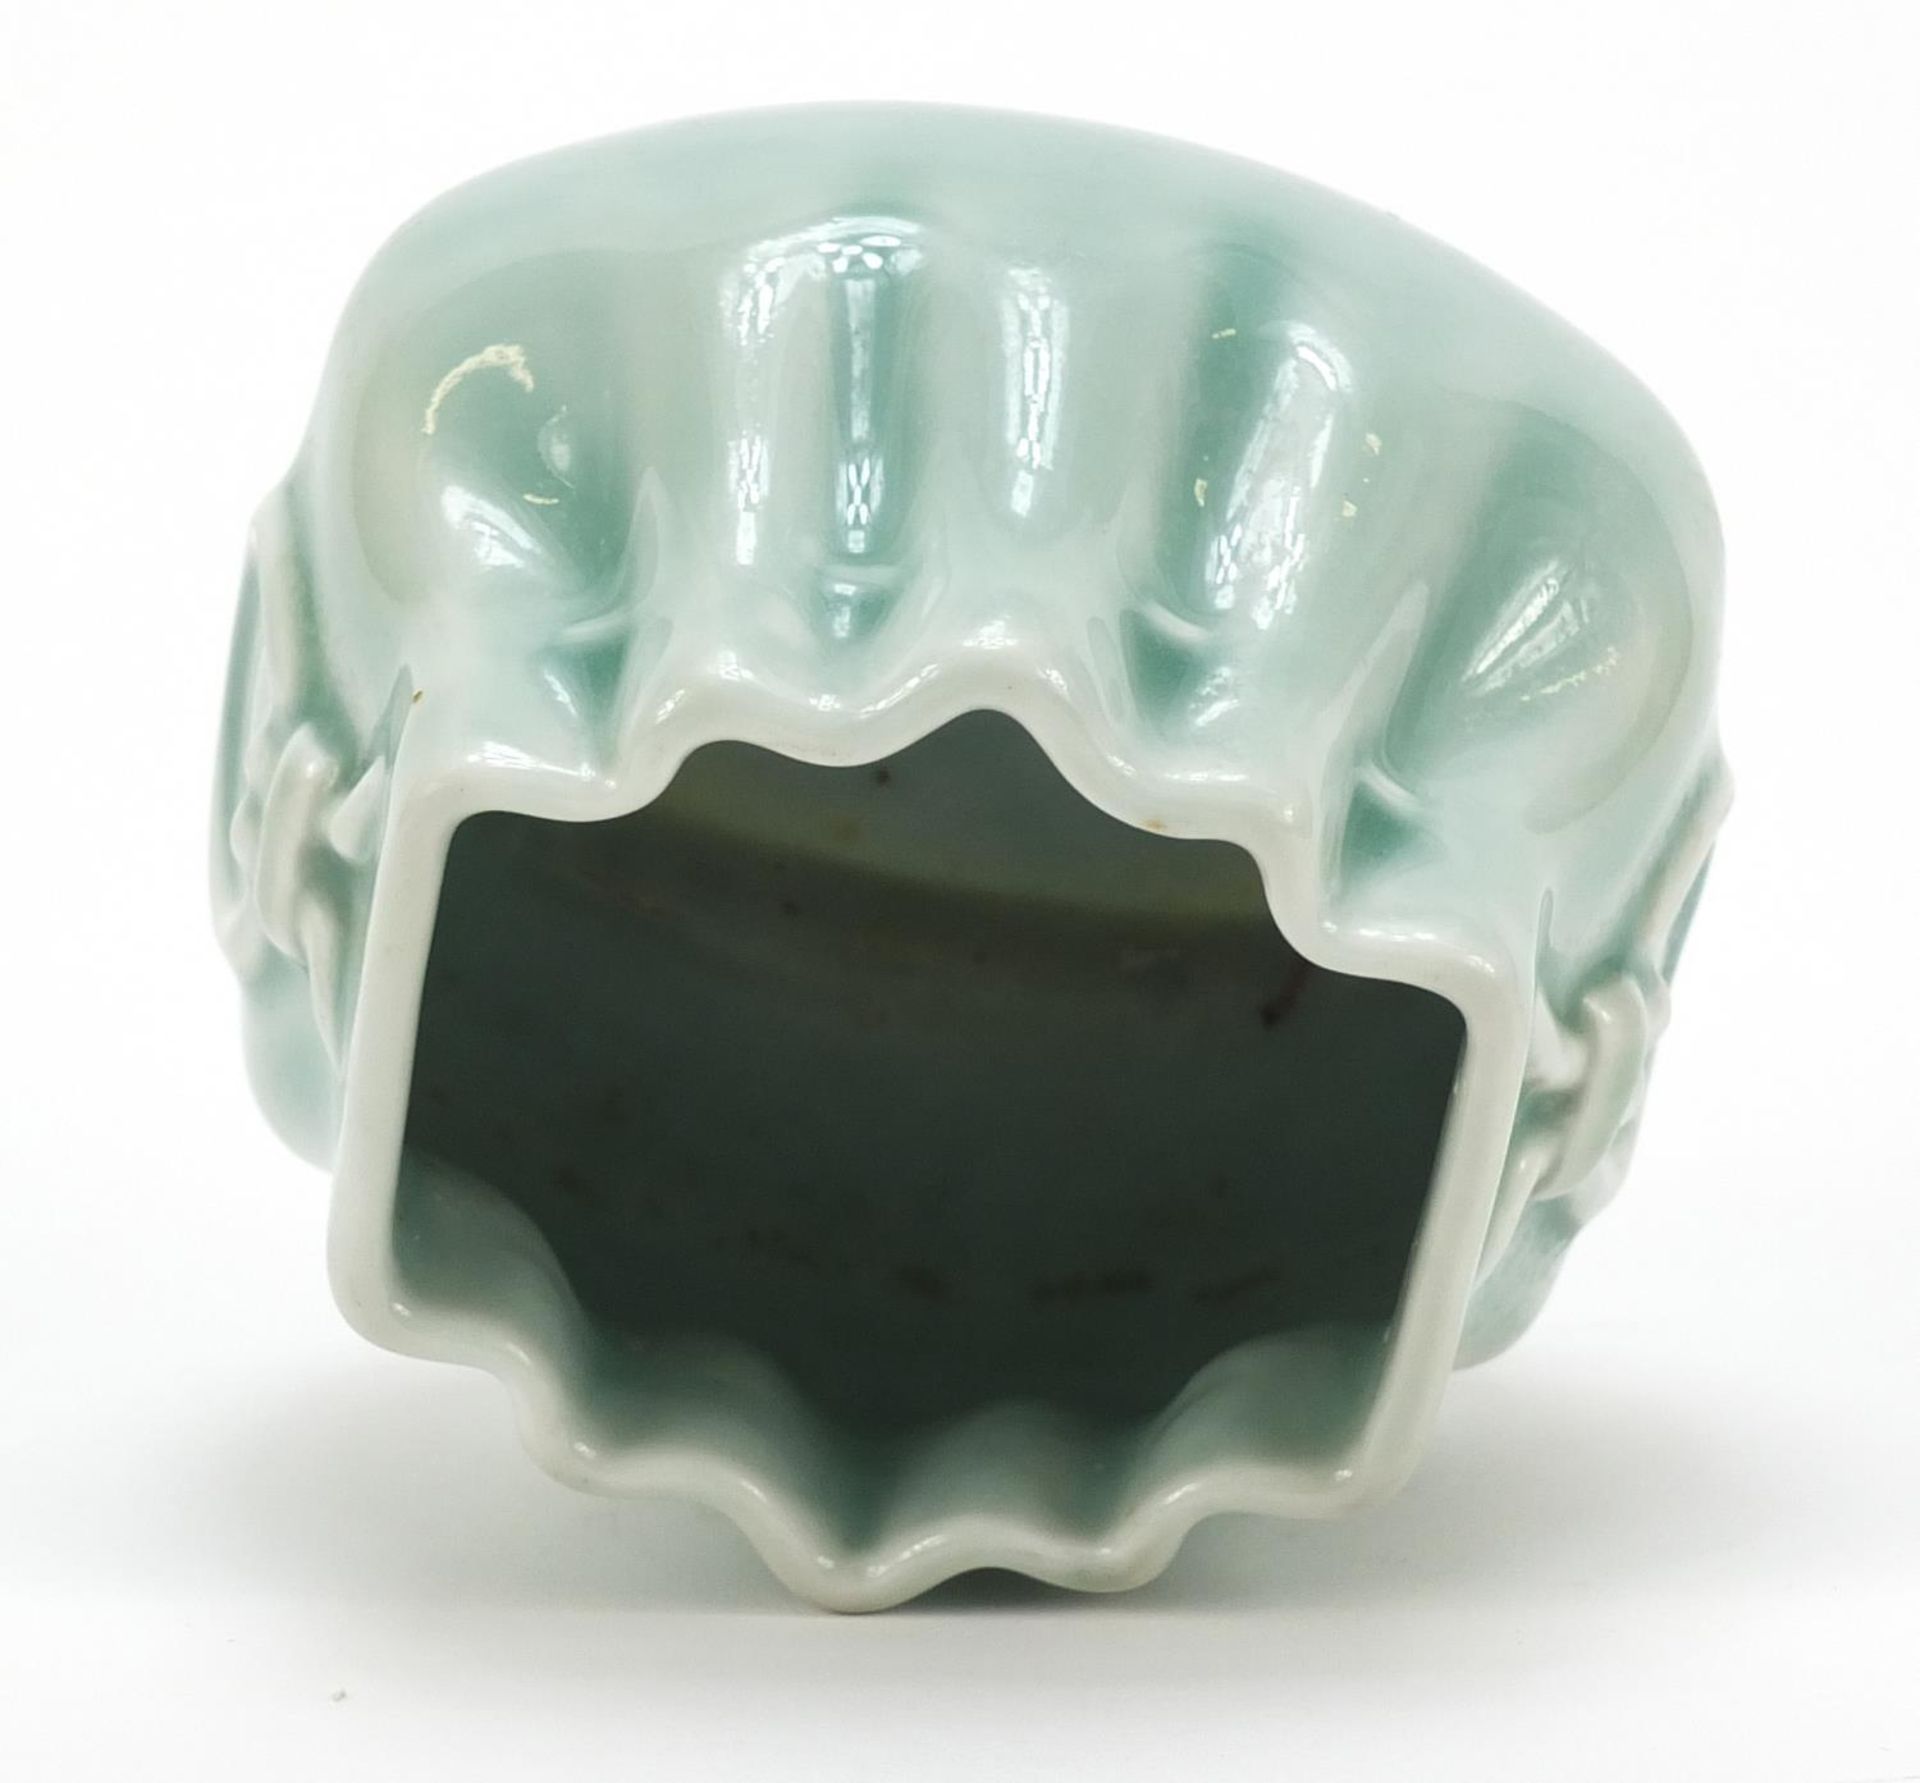 Chinese porcelain sack design vase having a celadon glaze, six figure character marks to the base, - Image 5 of 8